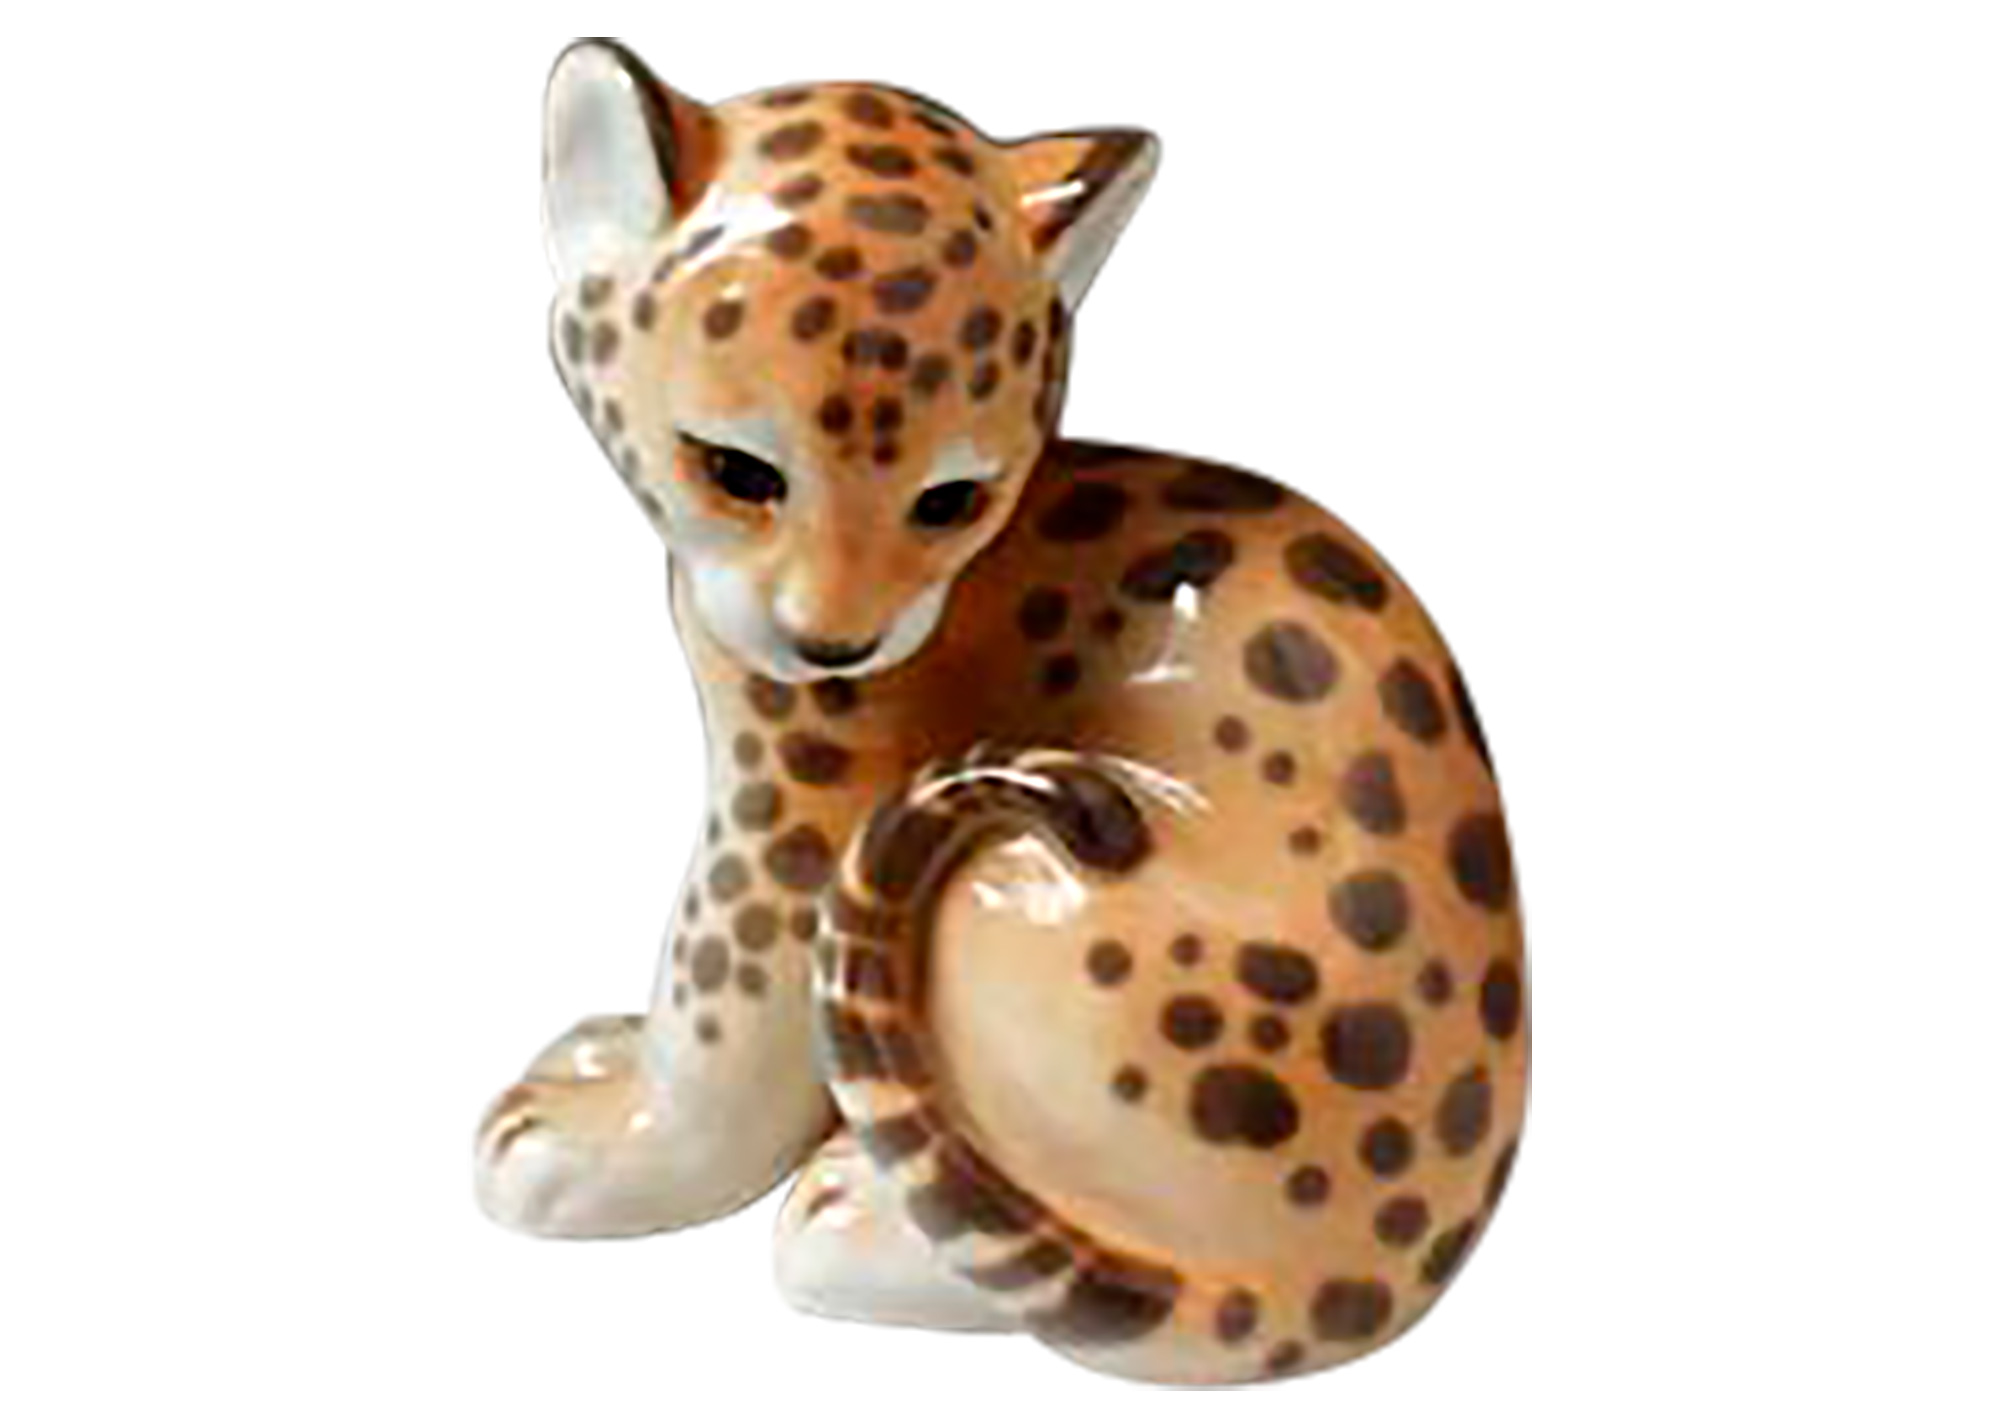 Buy Leopard Cub Figurine at GoldenCockerel.com